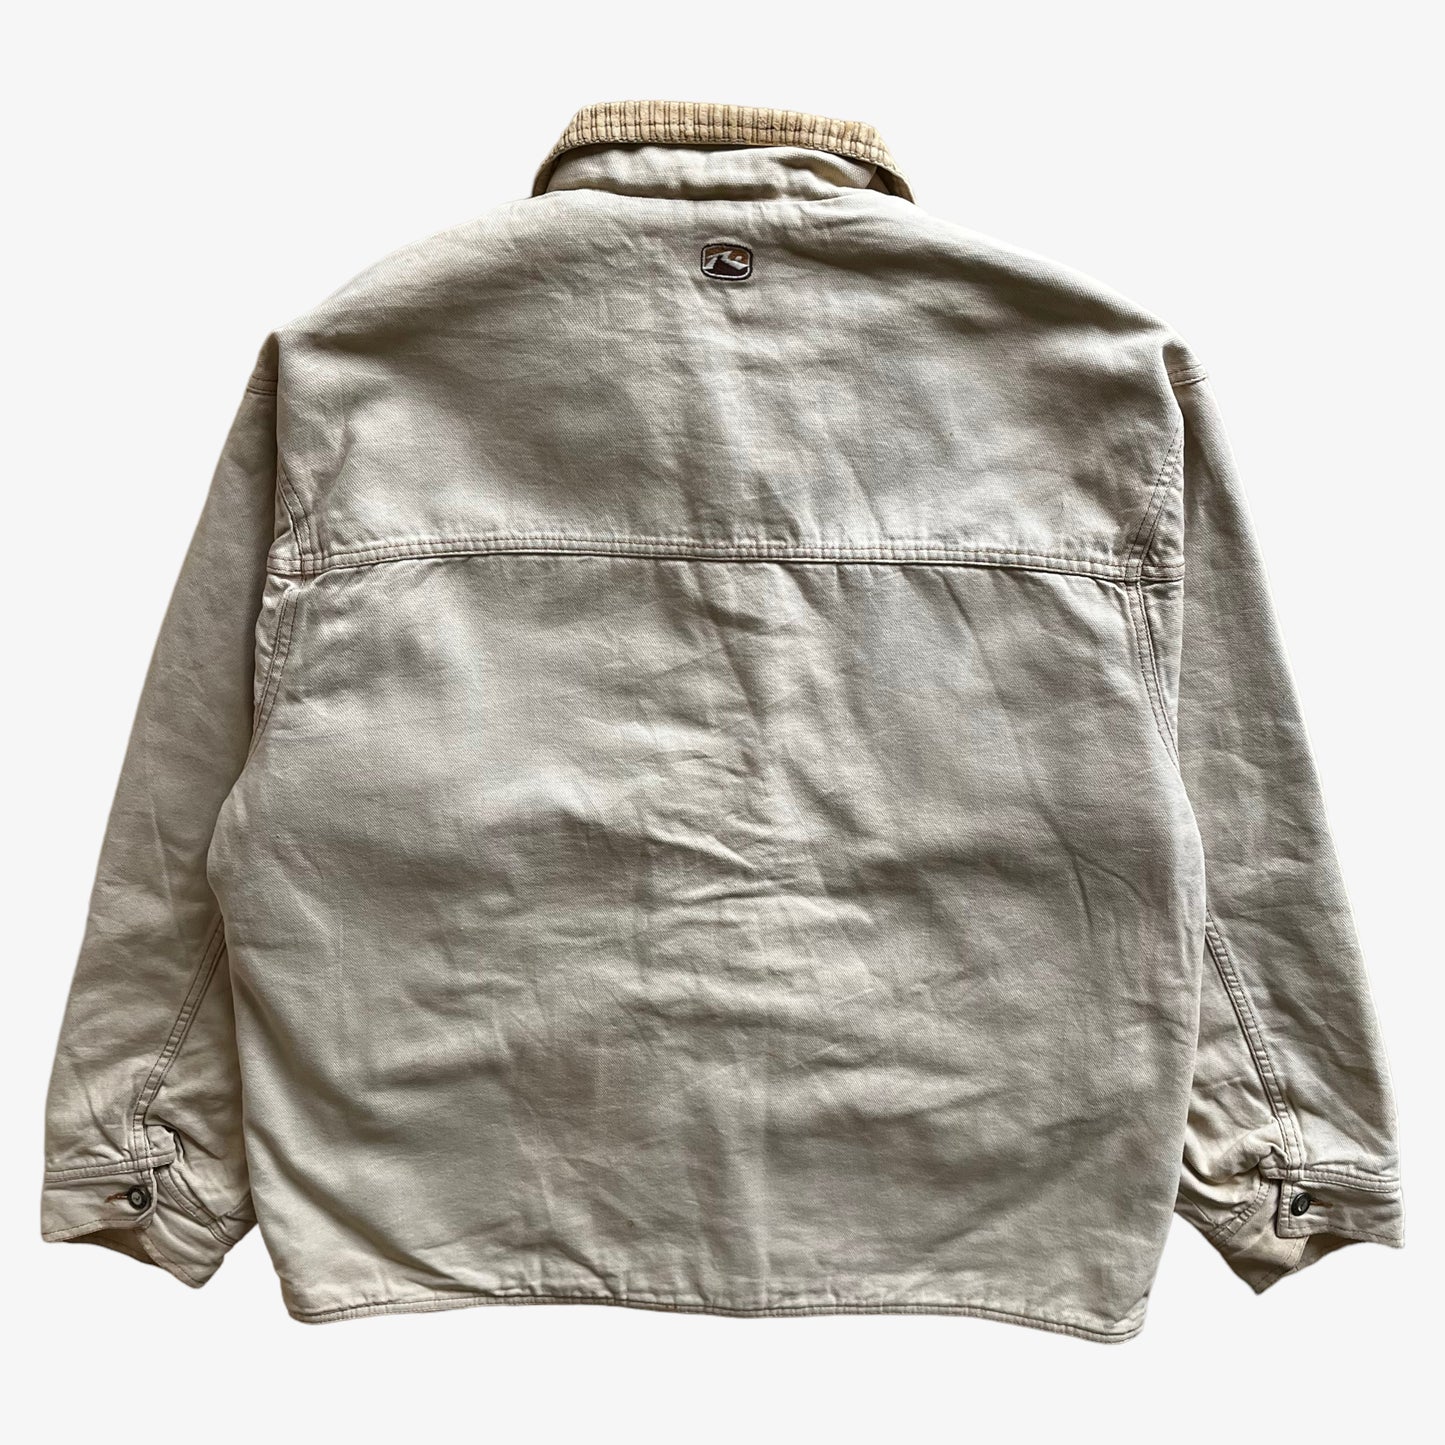 Vintage 90s Mens Rusty Workwear Jacket With Corduroy Collar Back - Casspios Dream